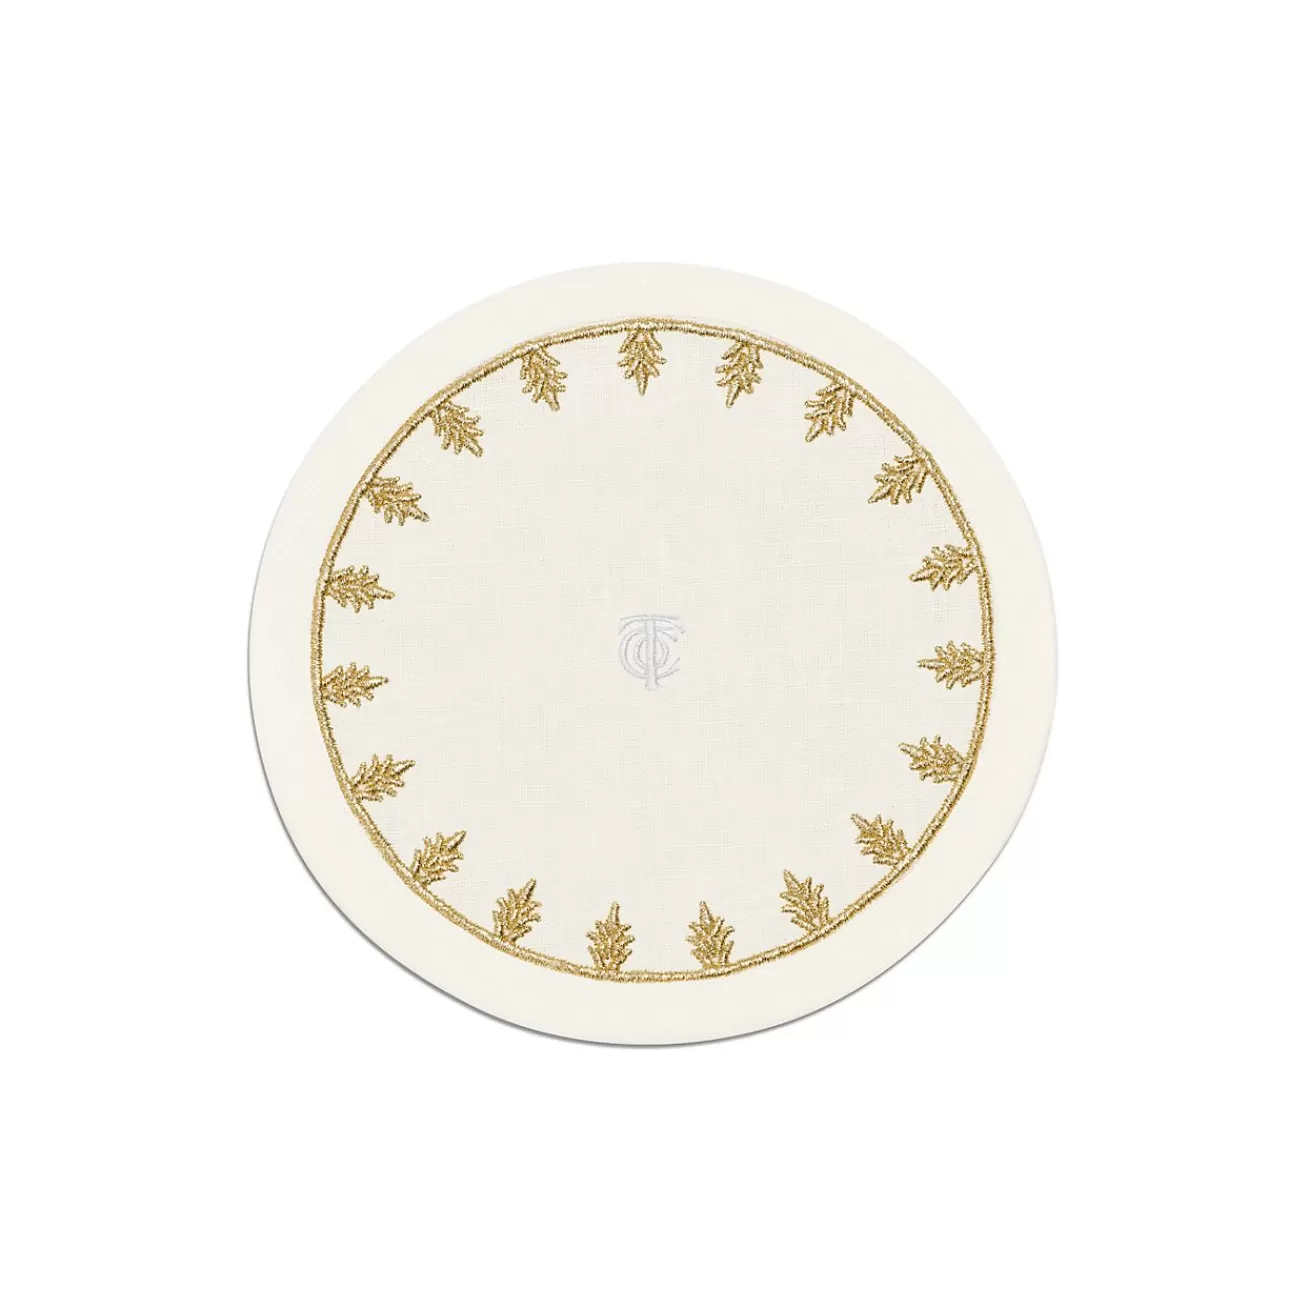 Tiffany & Co. Tiffany Crest Coaster in Embroidered White Linen | ^ Decor | Table Linens